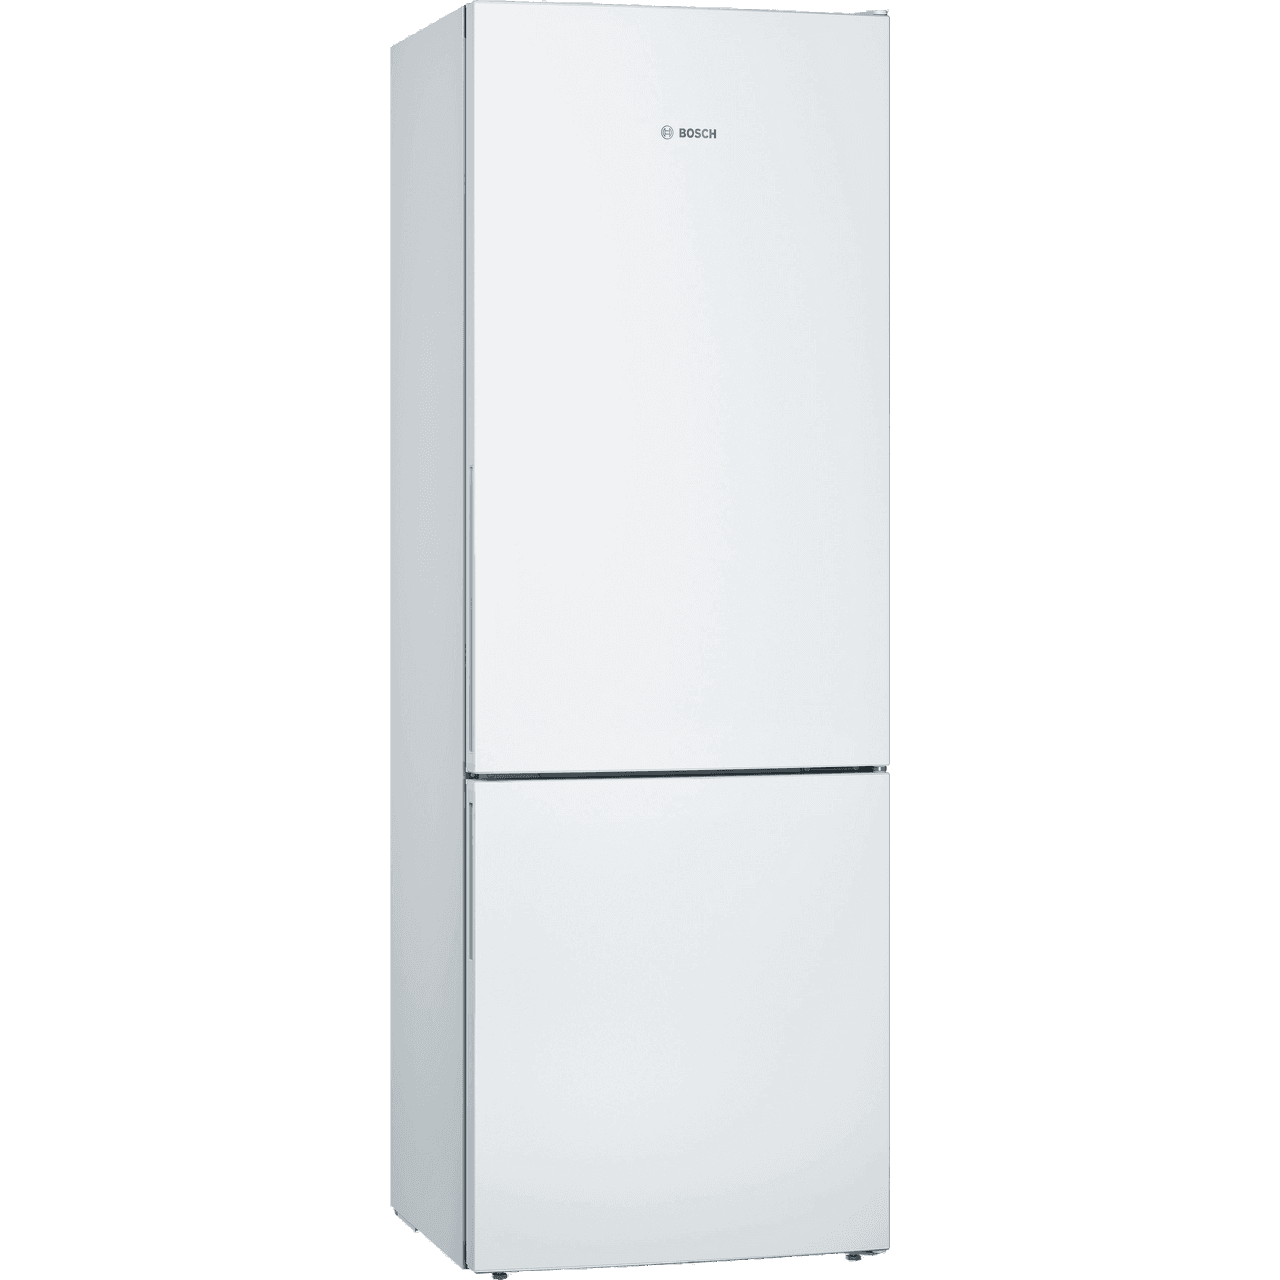 Bosch Series 6 70/30 Fridge Freezer - White - C Rated